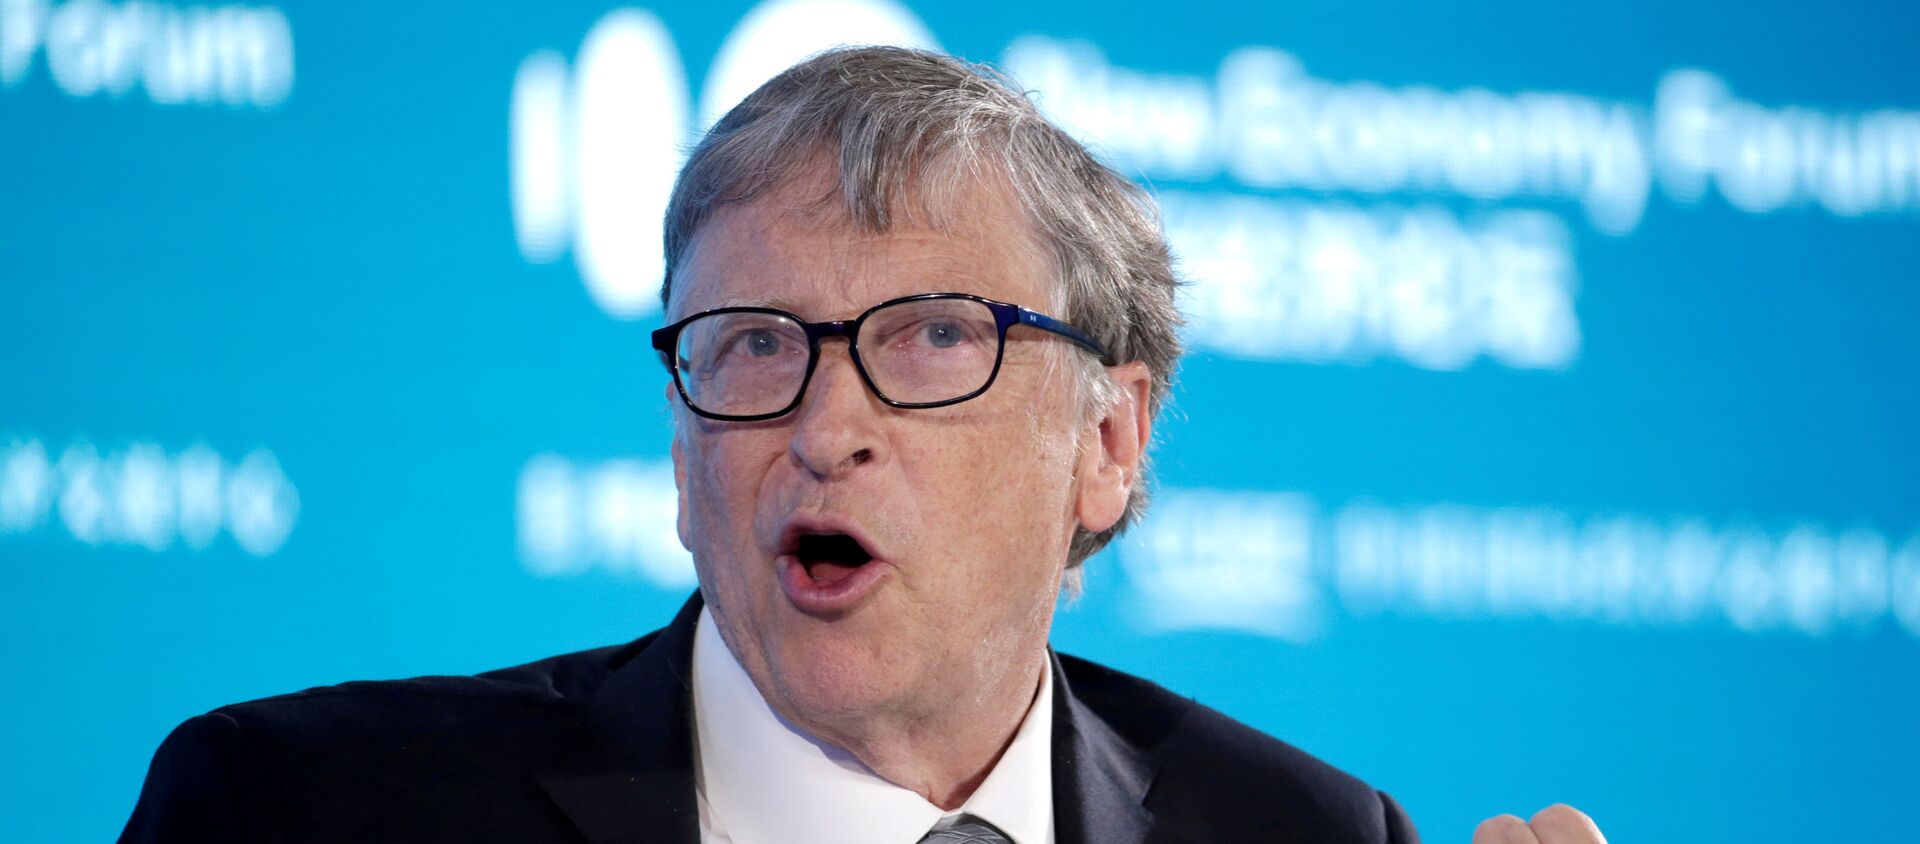 Bill Gates, Co-Chair of Bill & Melinda Gates Foundation, attends a conversation at the 2019 New Economy Forum in Beijing, China November 21, 2019 - Sputnik International, 1920, 26.02.2021